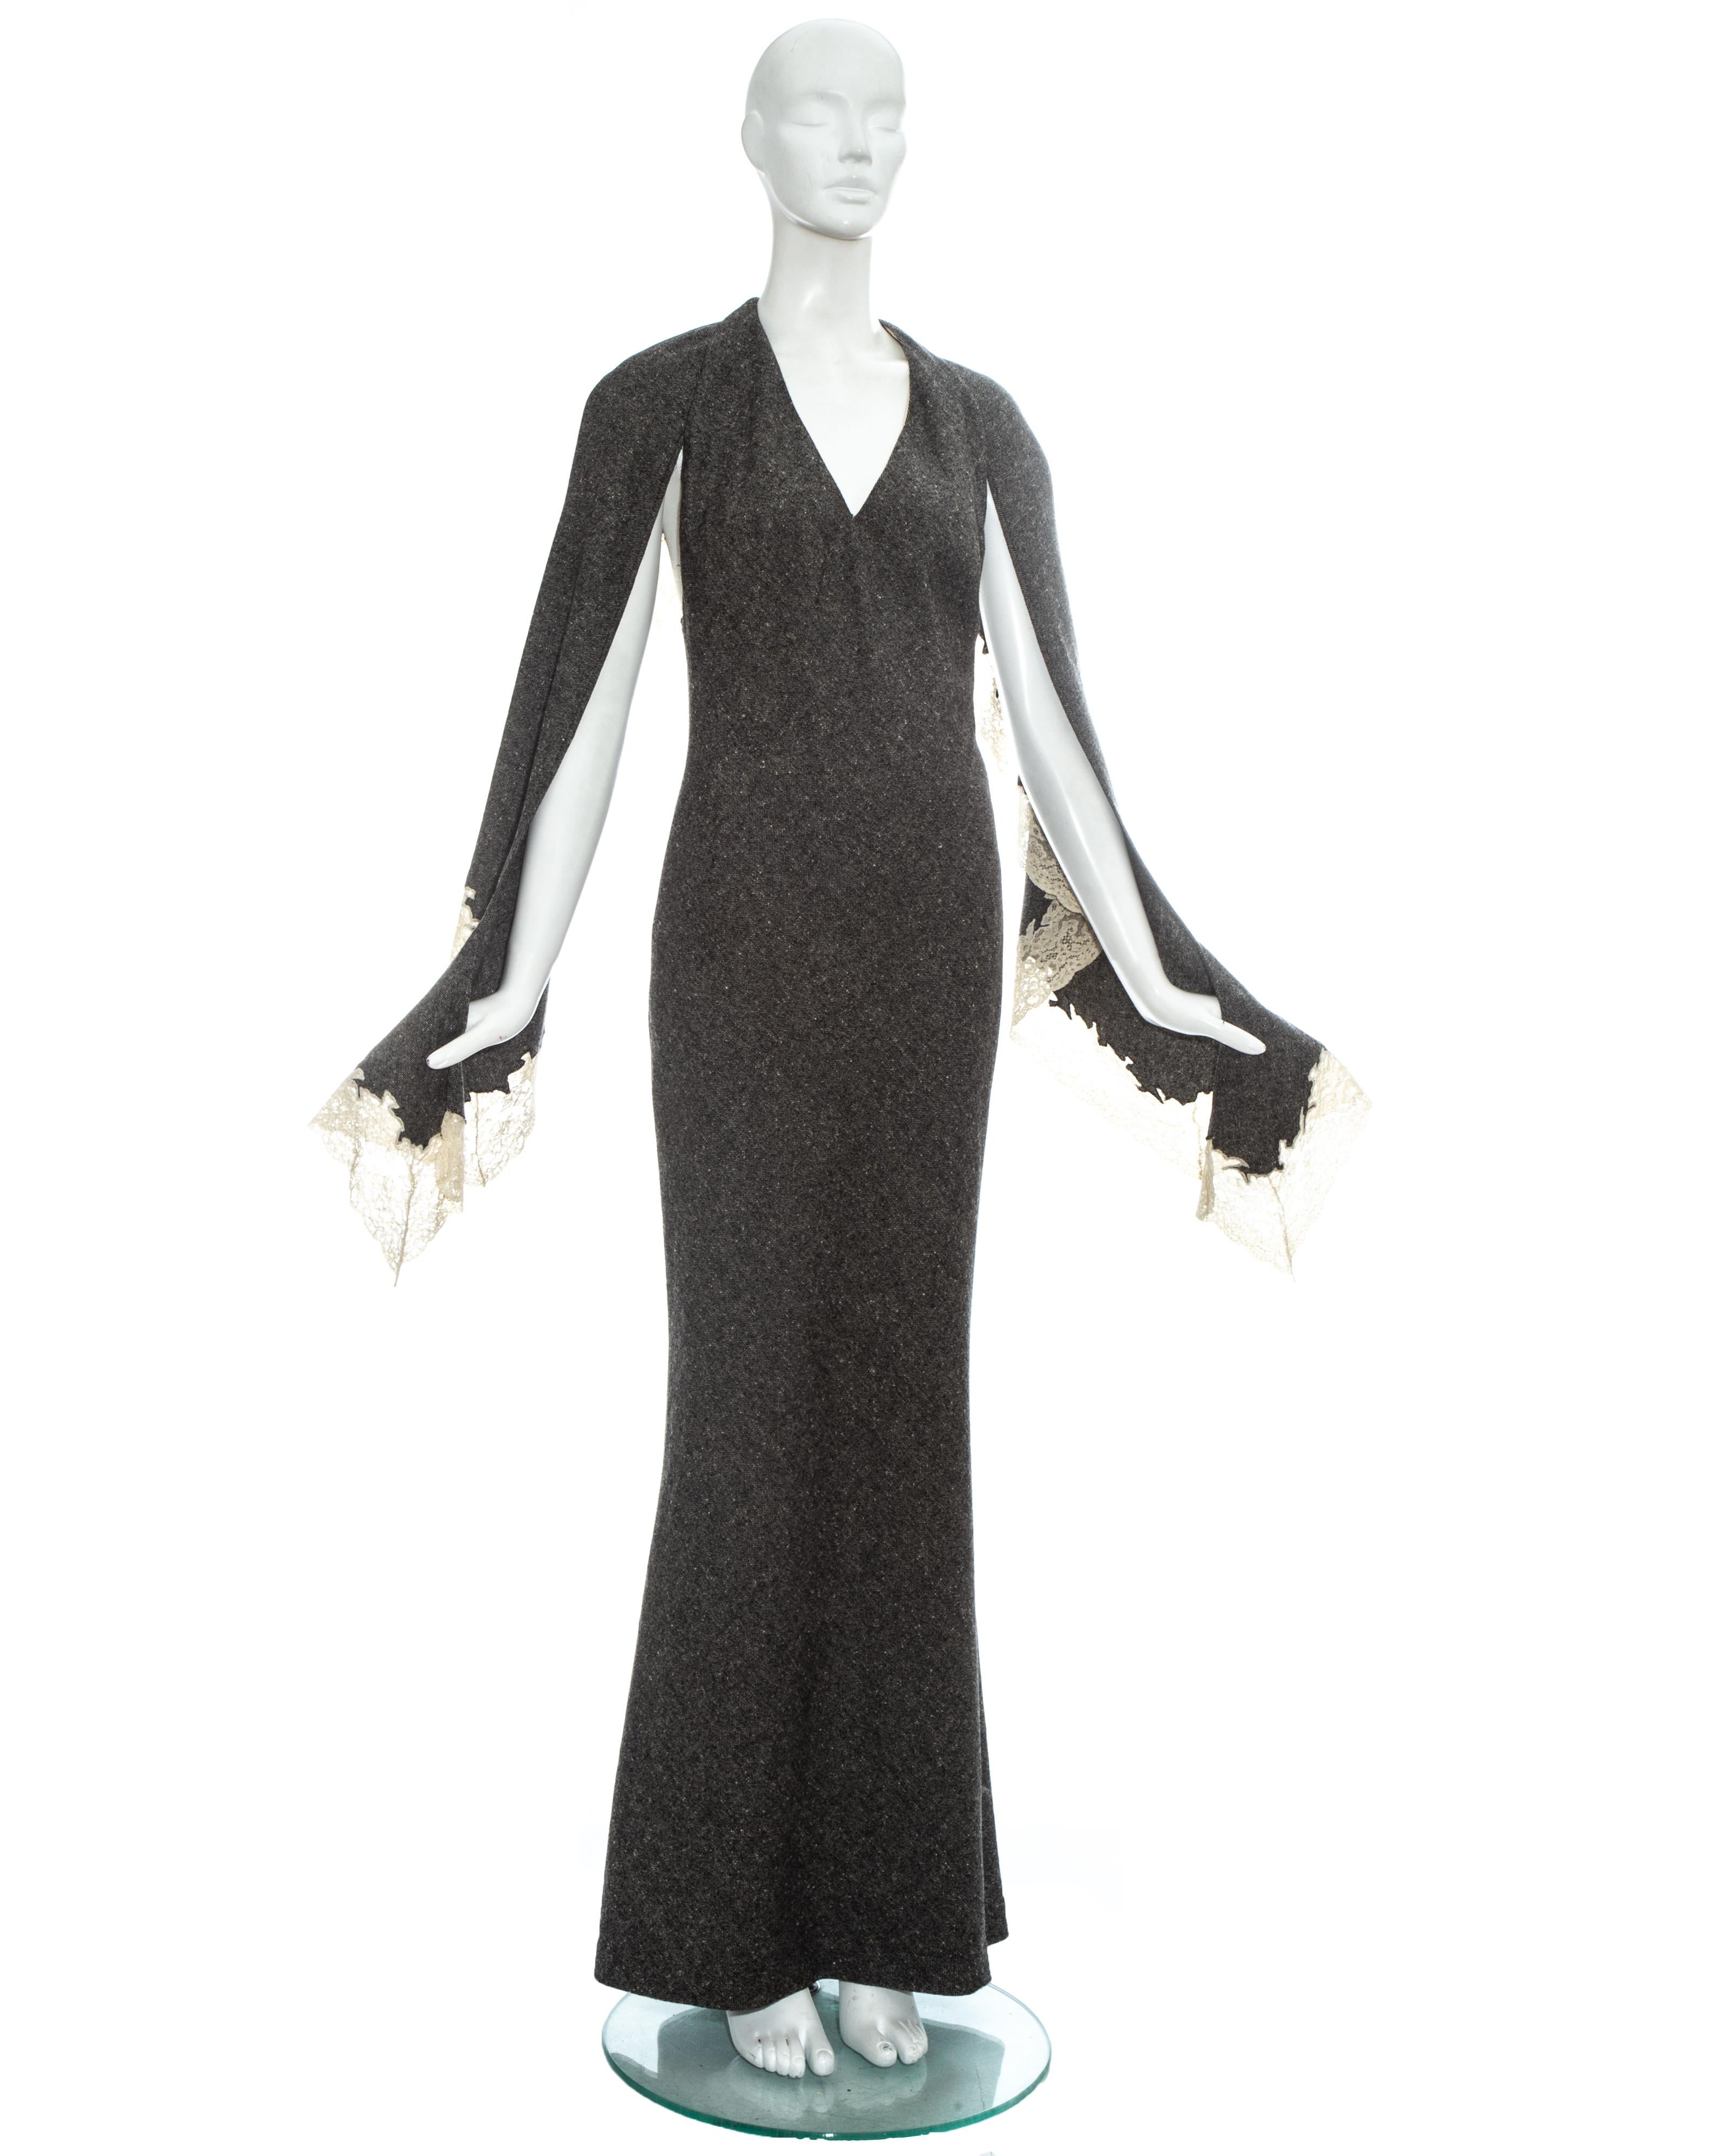 Women's Christian Dior by John Galliano grey wool dress with cream lace trim, fw 1998